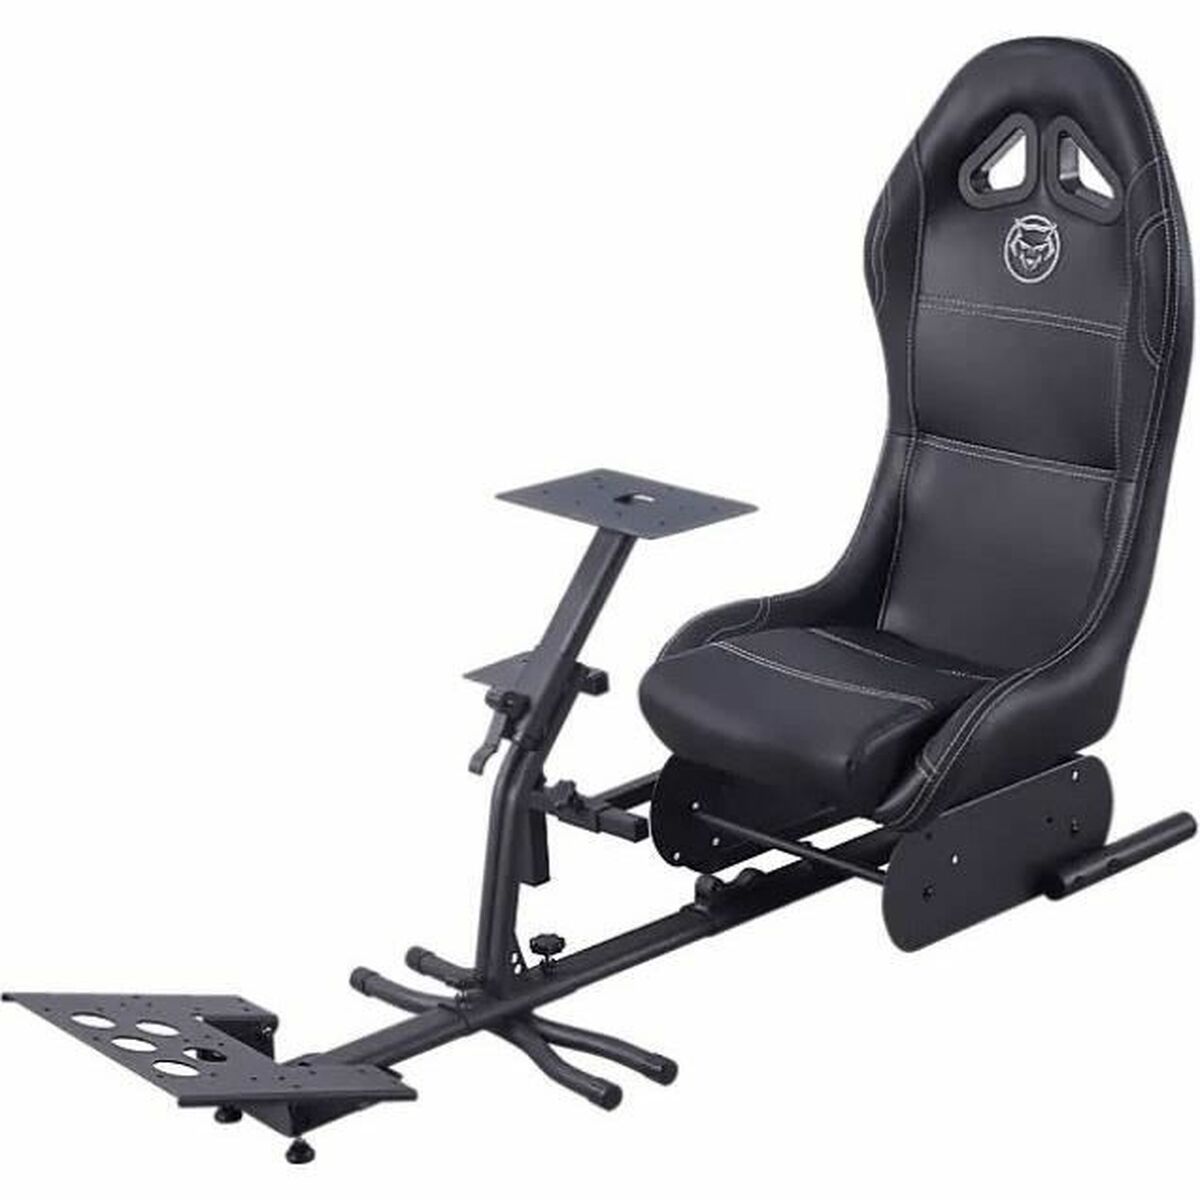 Sedile Racing Mobility Lab Qware Gaming Race Seat Nero 60 x 48 x 51 cm